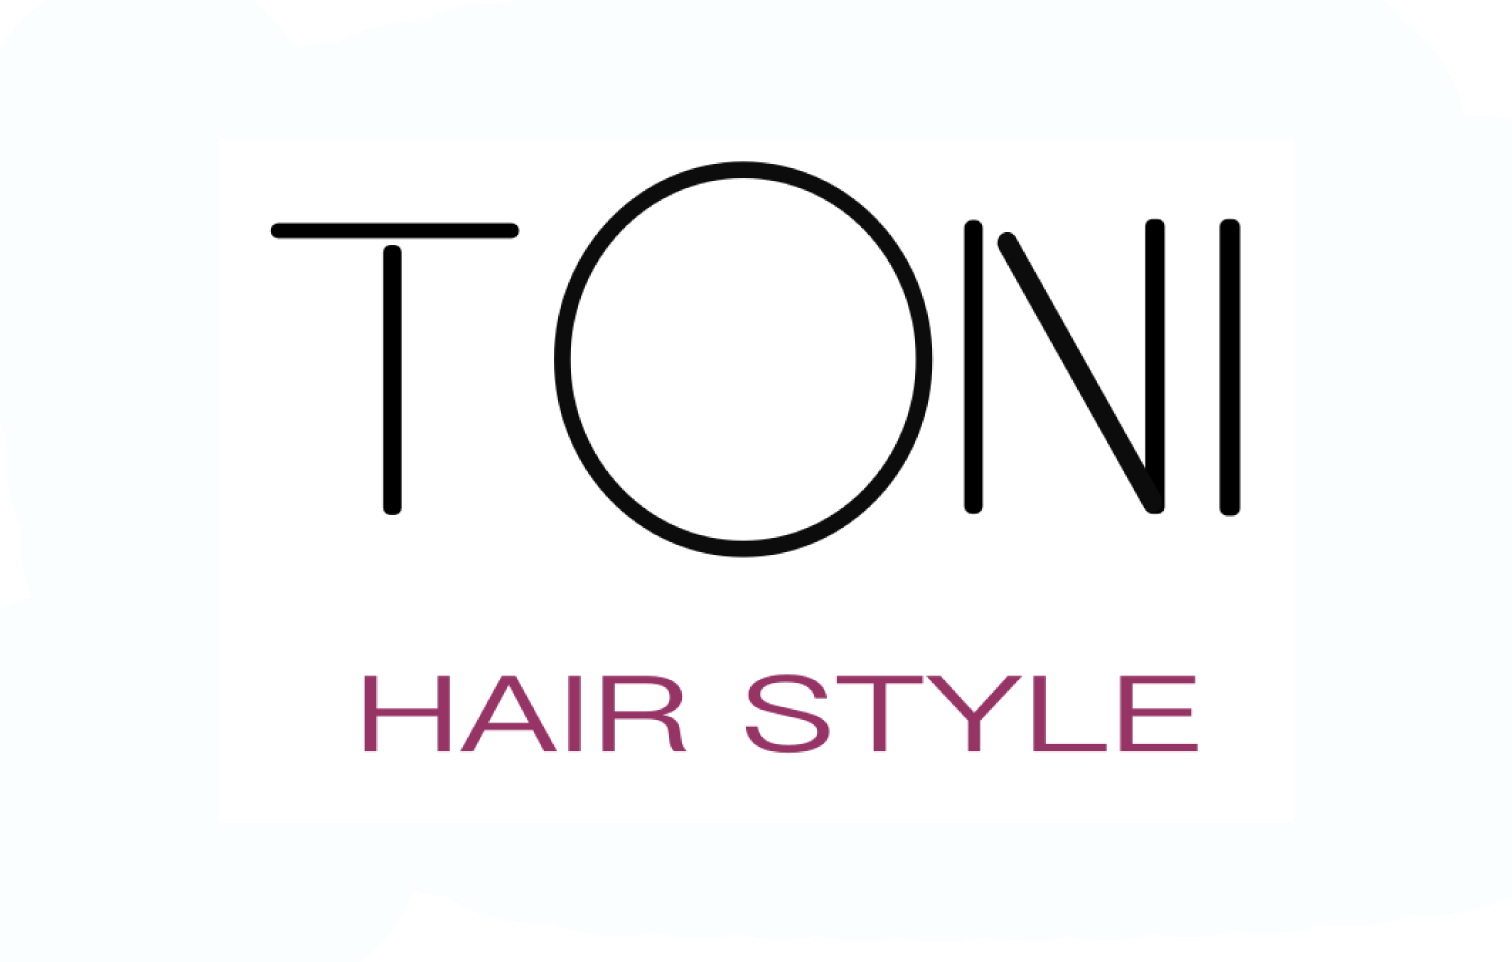 Toni Hair Style